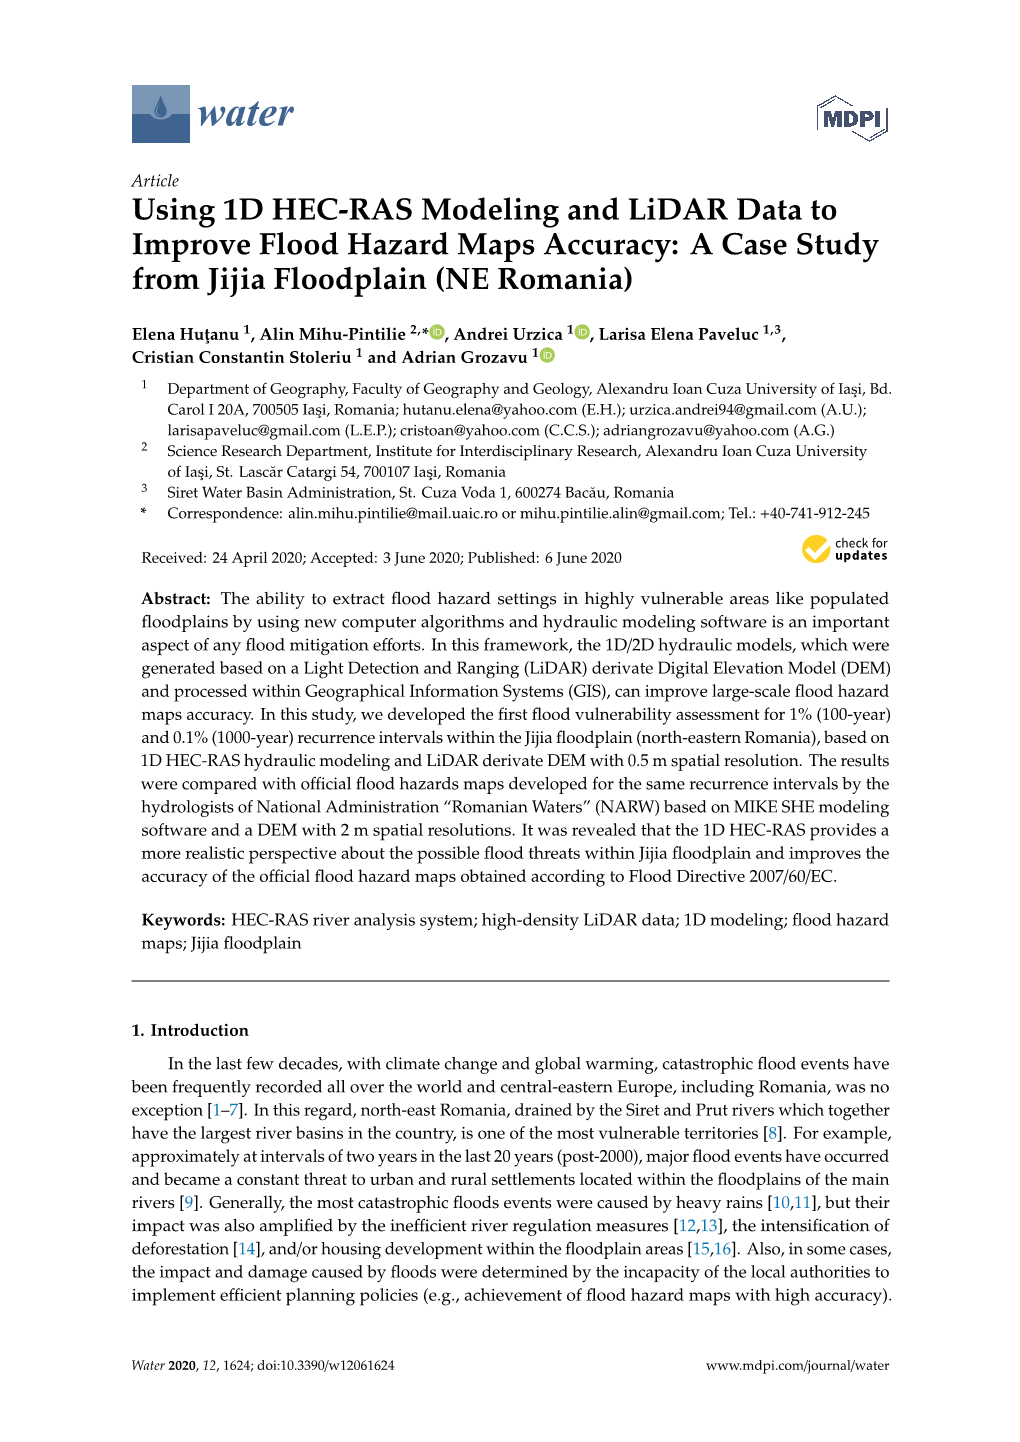 Using 1D HEC-RAS Modeling and Lidar Data to Improve Flood Hazard Maps Accuracy: a Case Study from Jijia Floodplain (NE Romania)